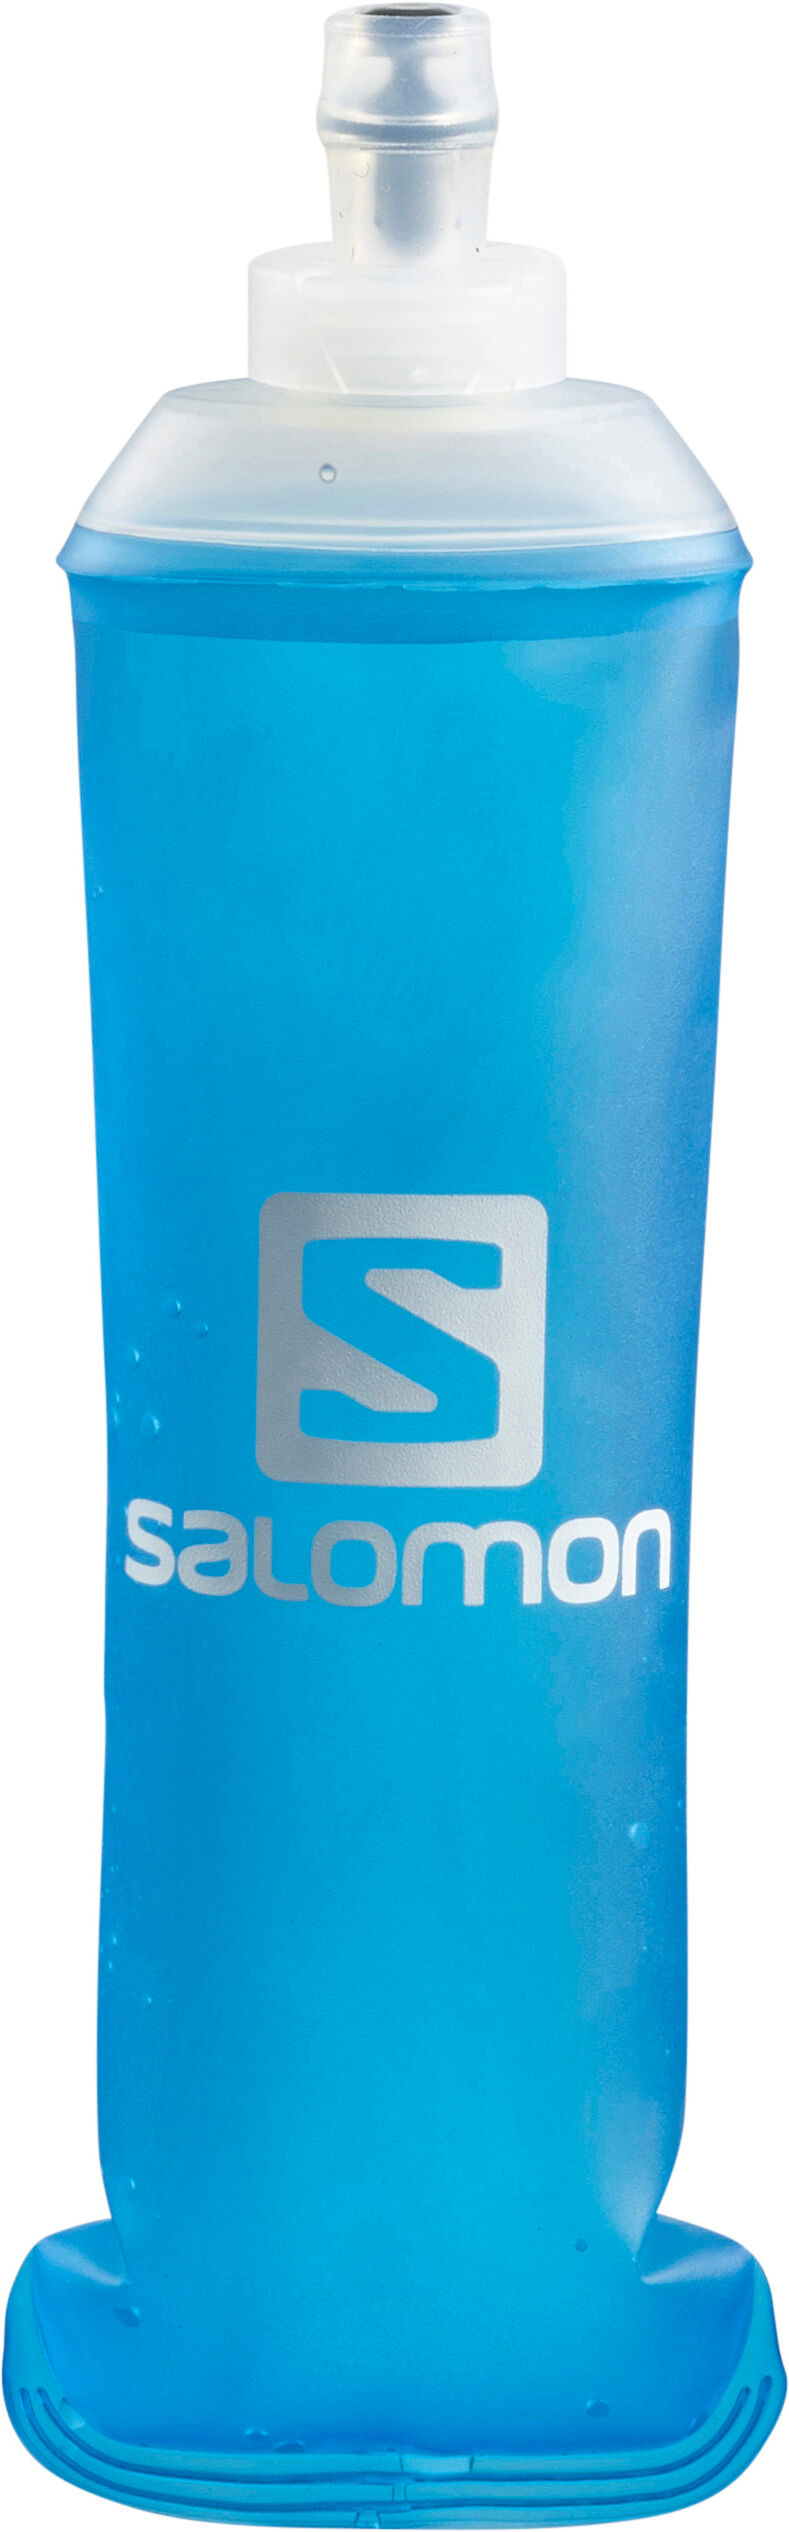 Salomon Soft Flask 500 mL - Juomapullo